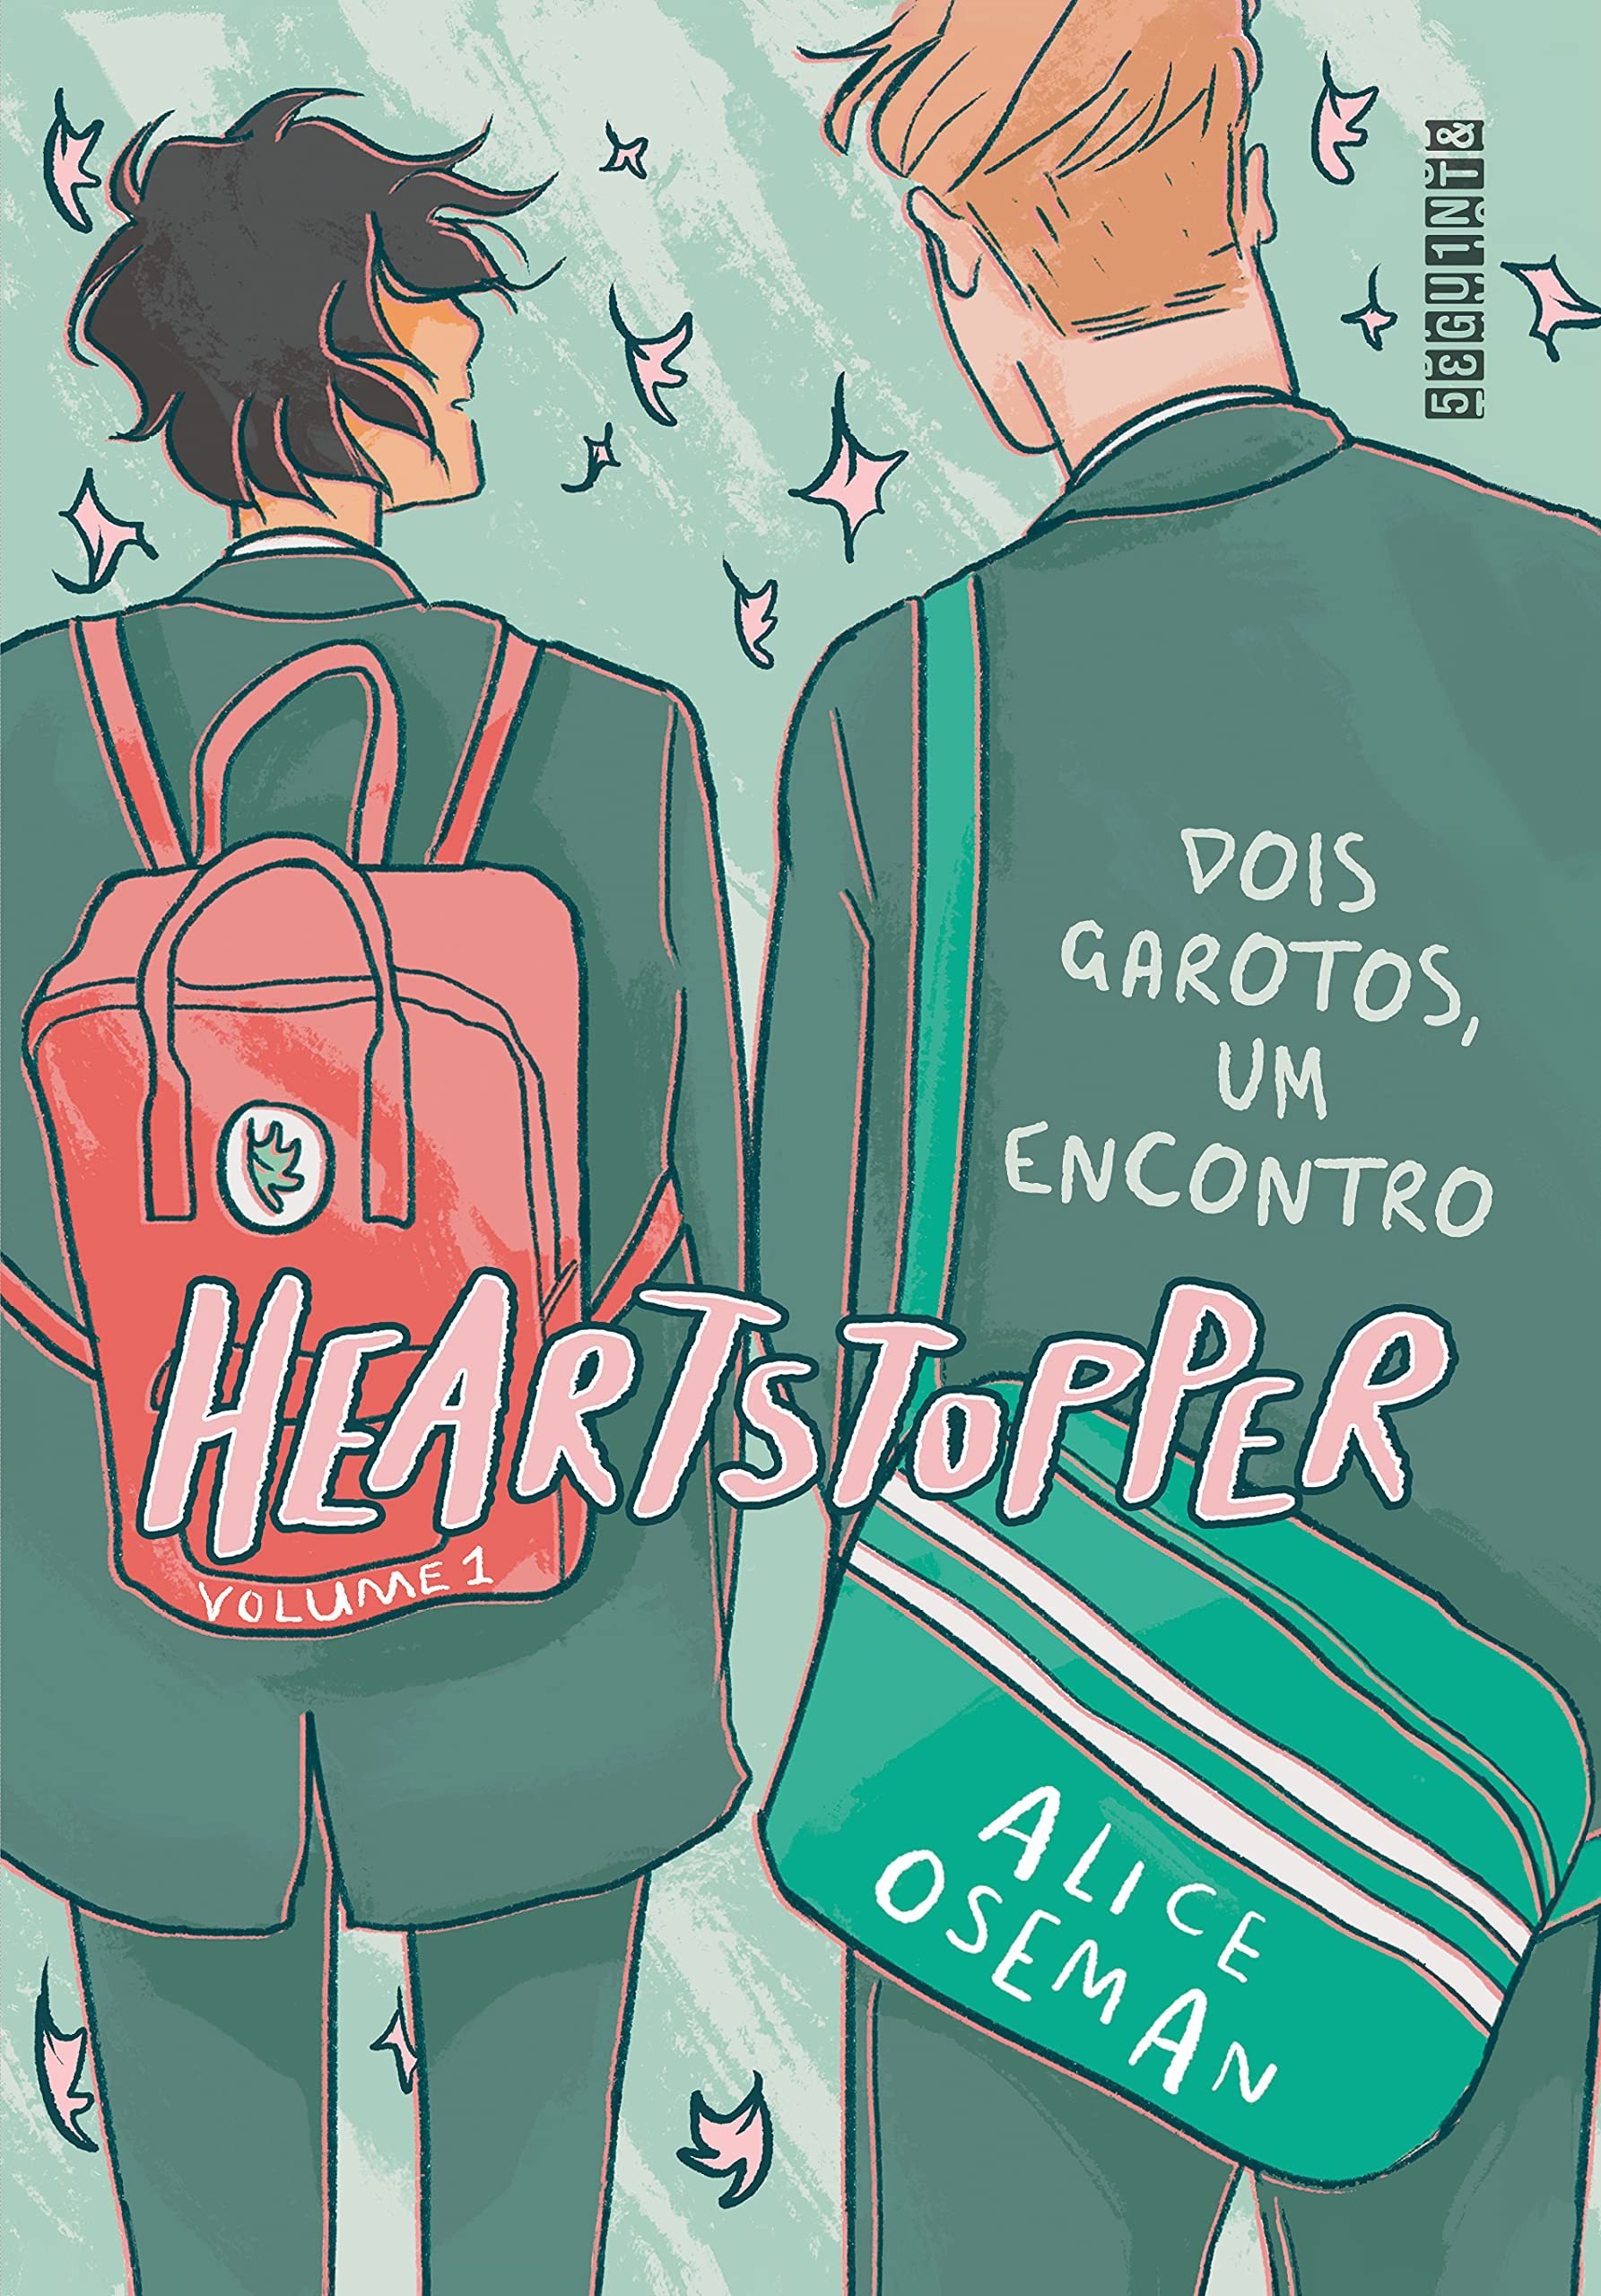 capa do livro Heartstopper